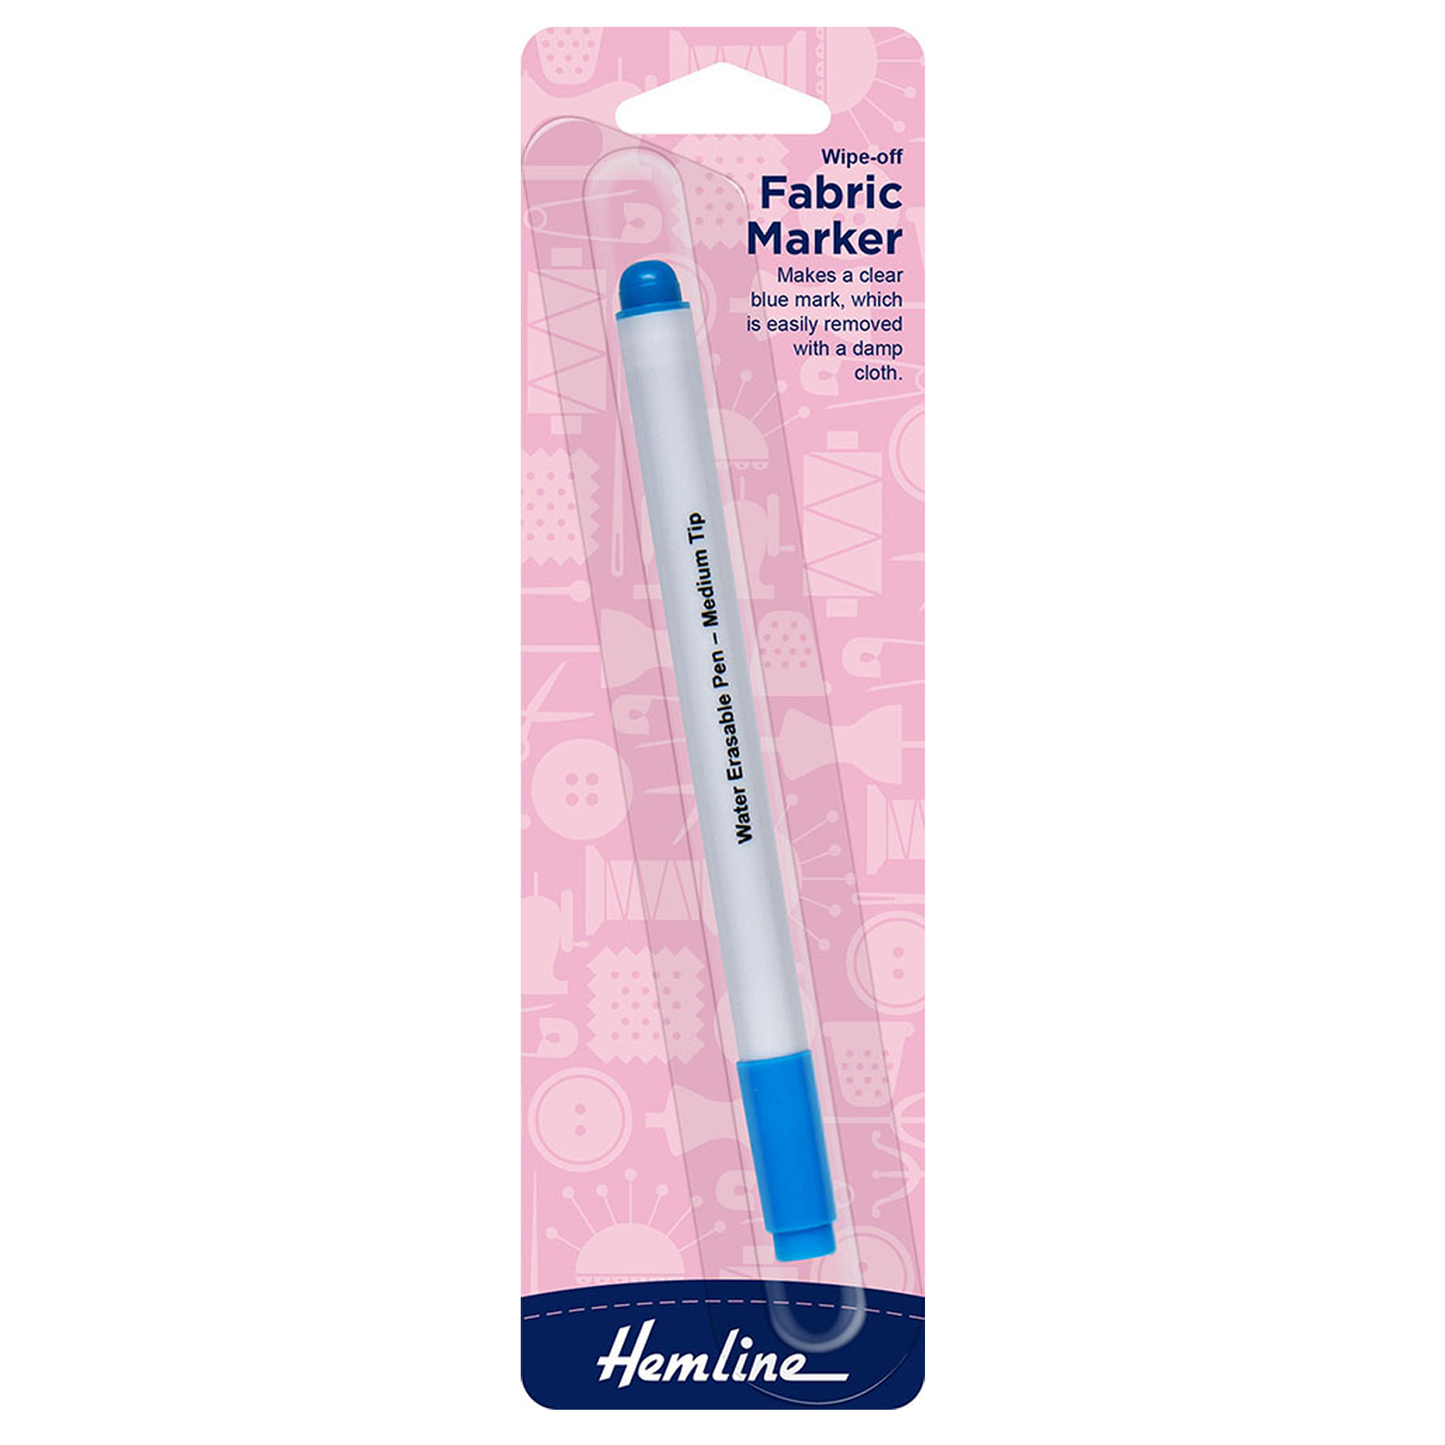 Hemline Fabric Marker Pen